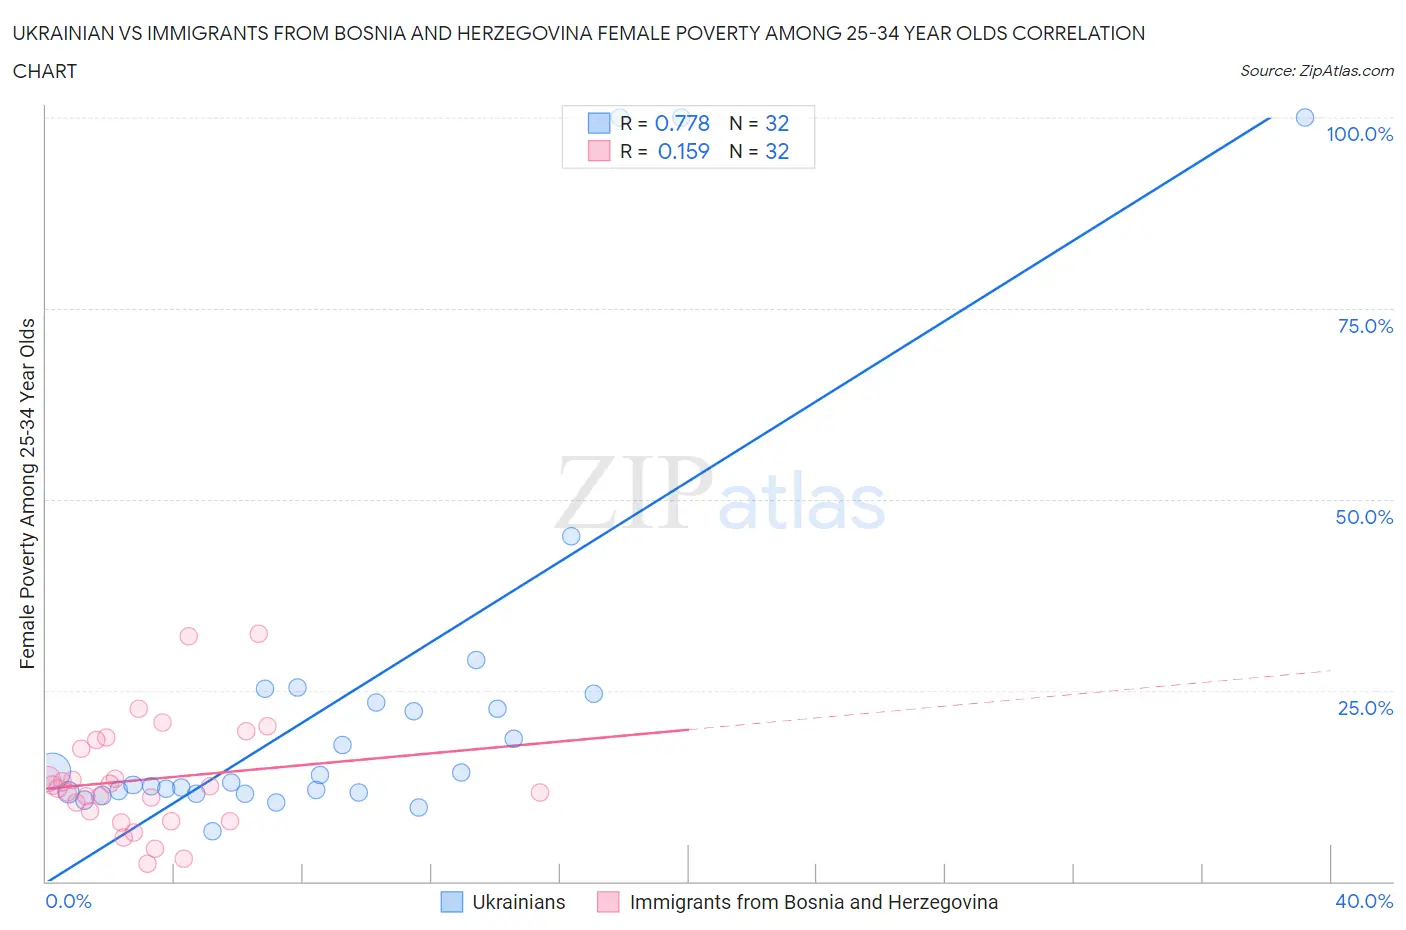 Ukrainian vs Immigrants from Bosnia and Herzegovina Female Poverty Among 25-34 Year Olds